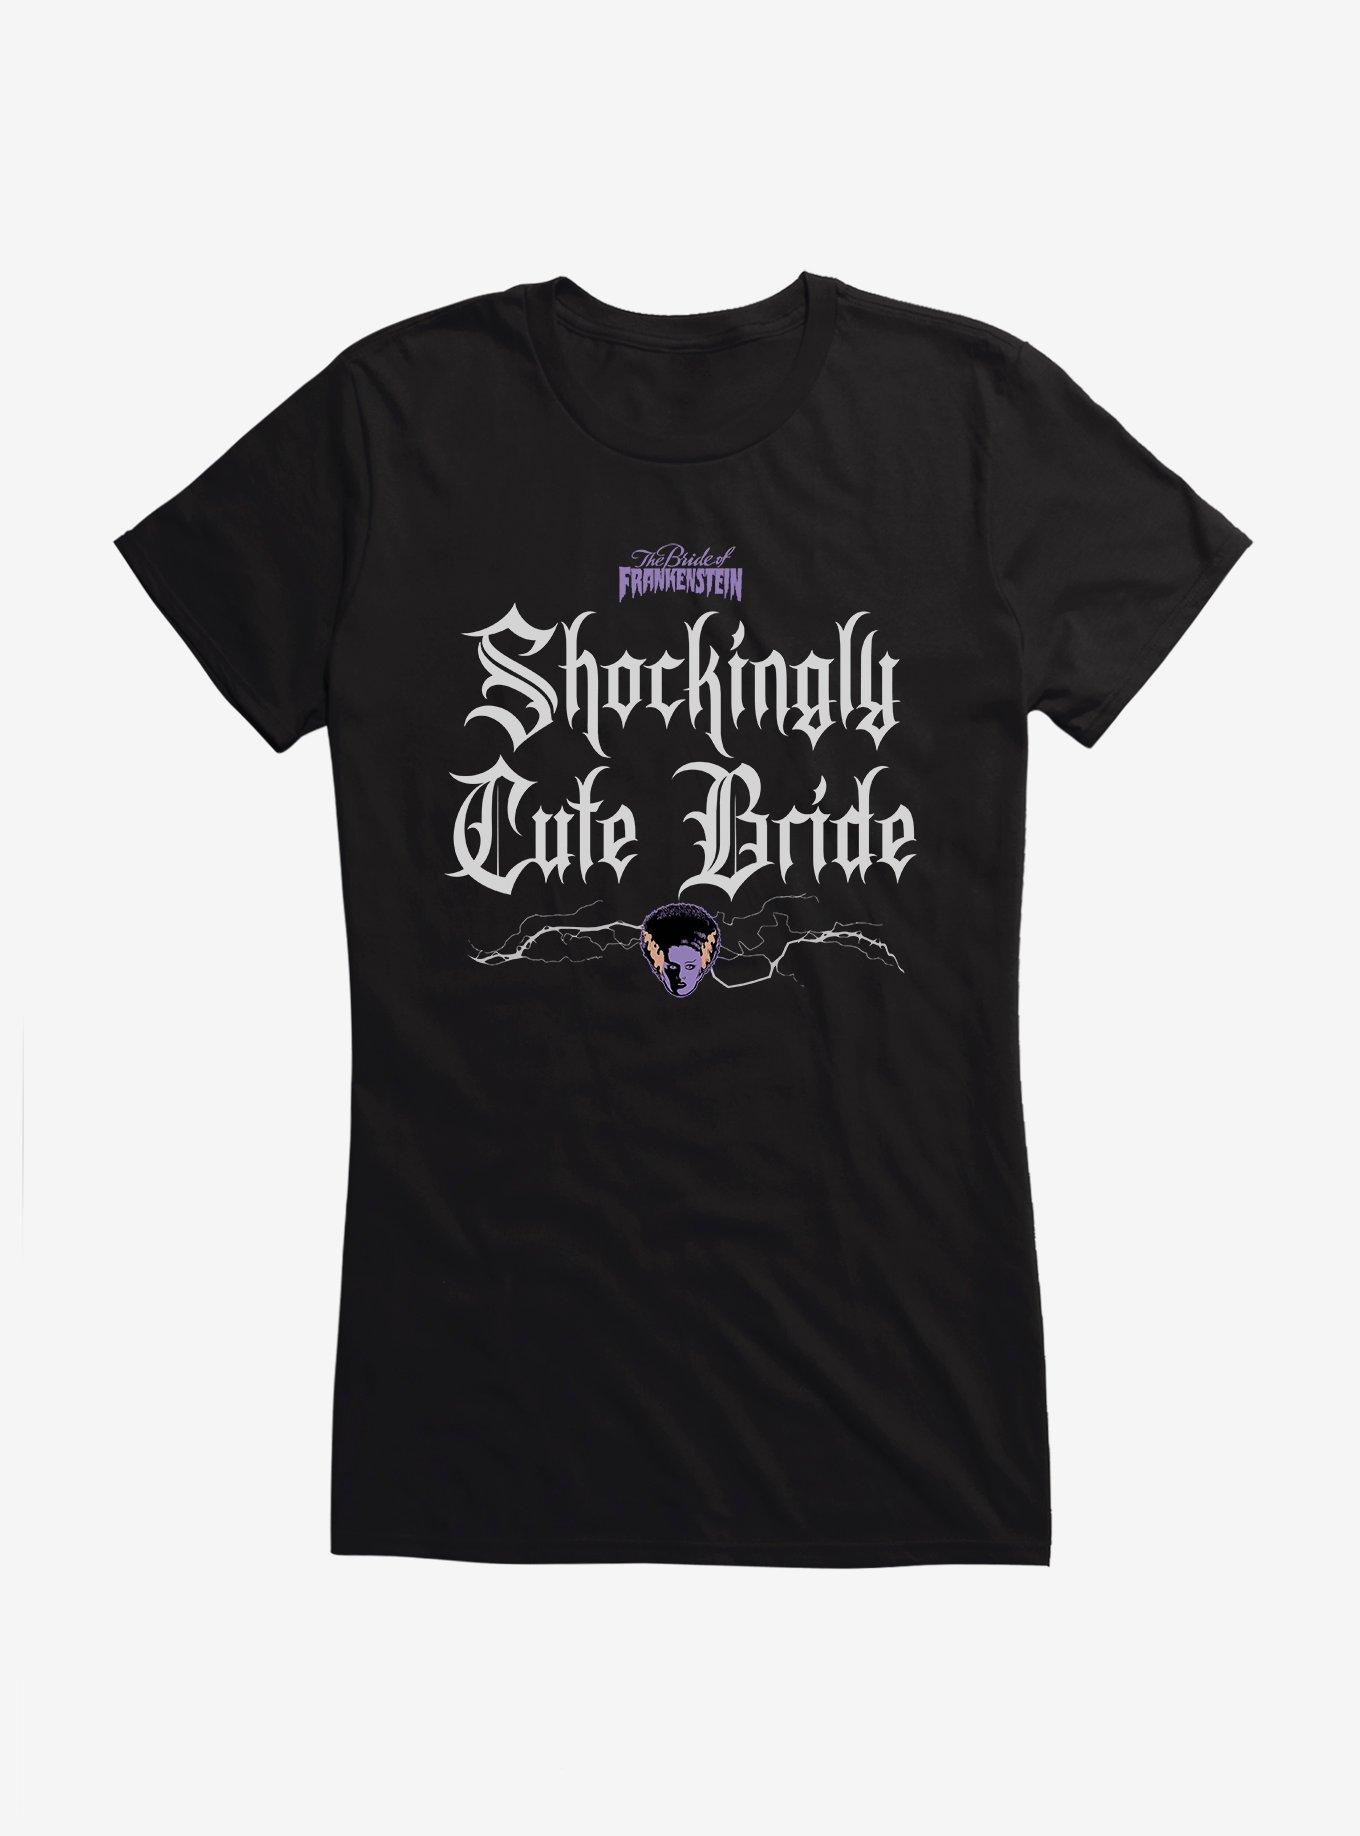 Bride Of Frankenstein Shockingly Cute Bride Girls T-Shirt, BLACK, hi-res